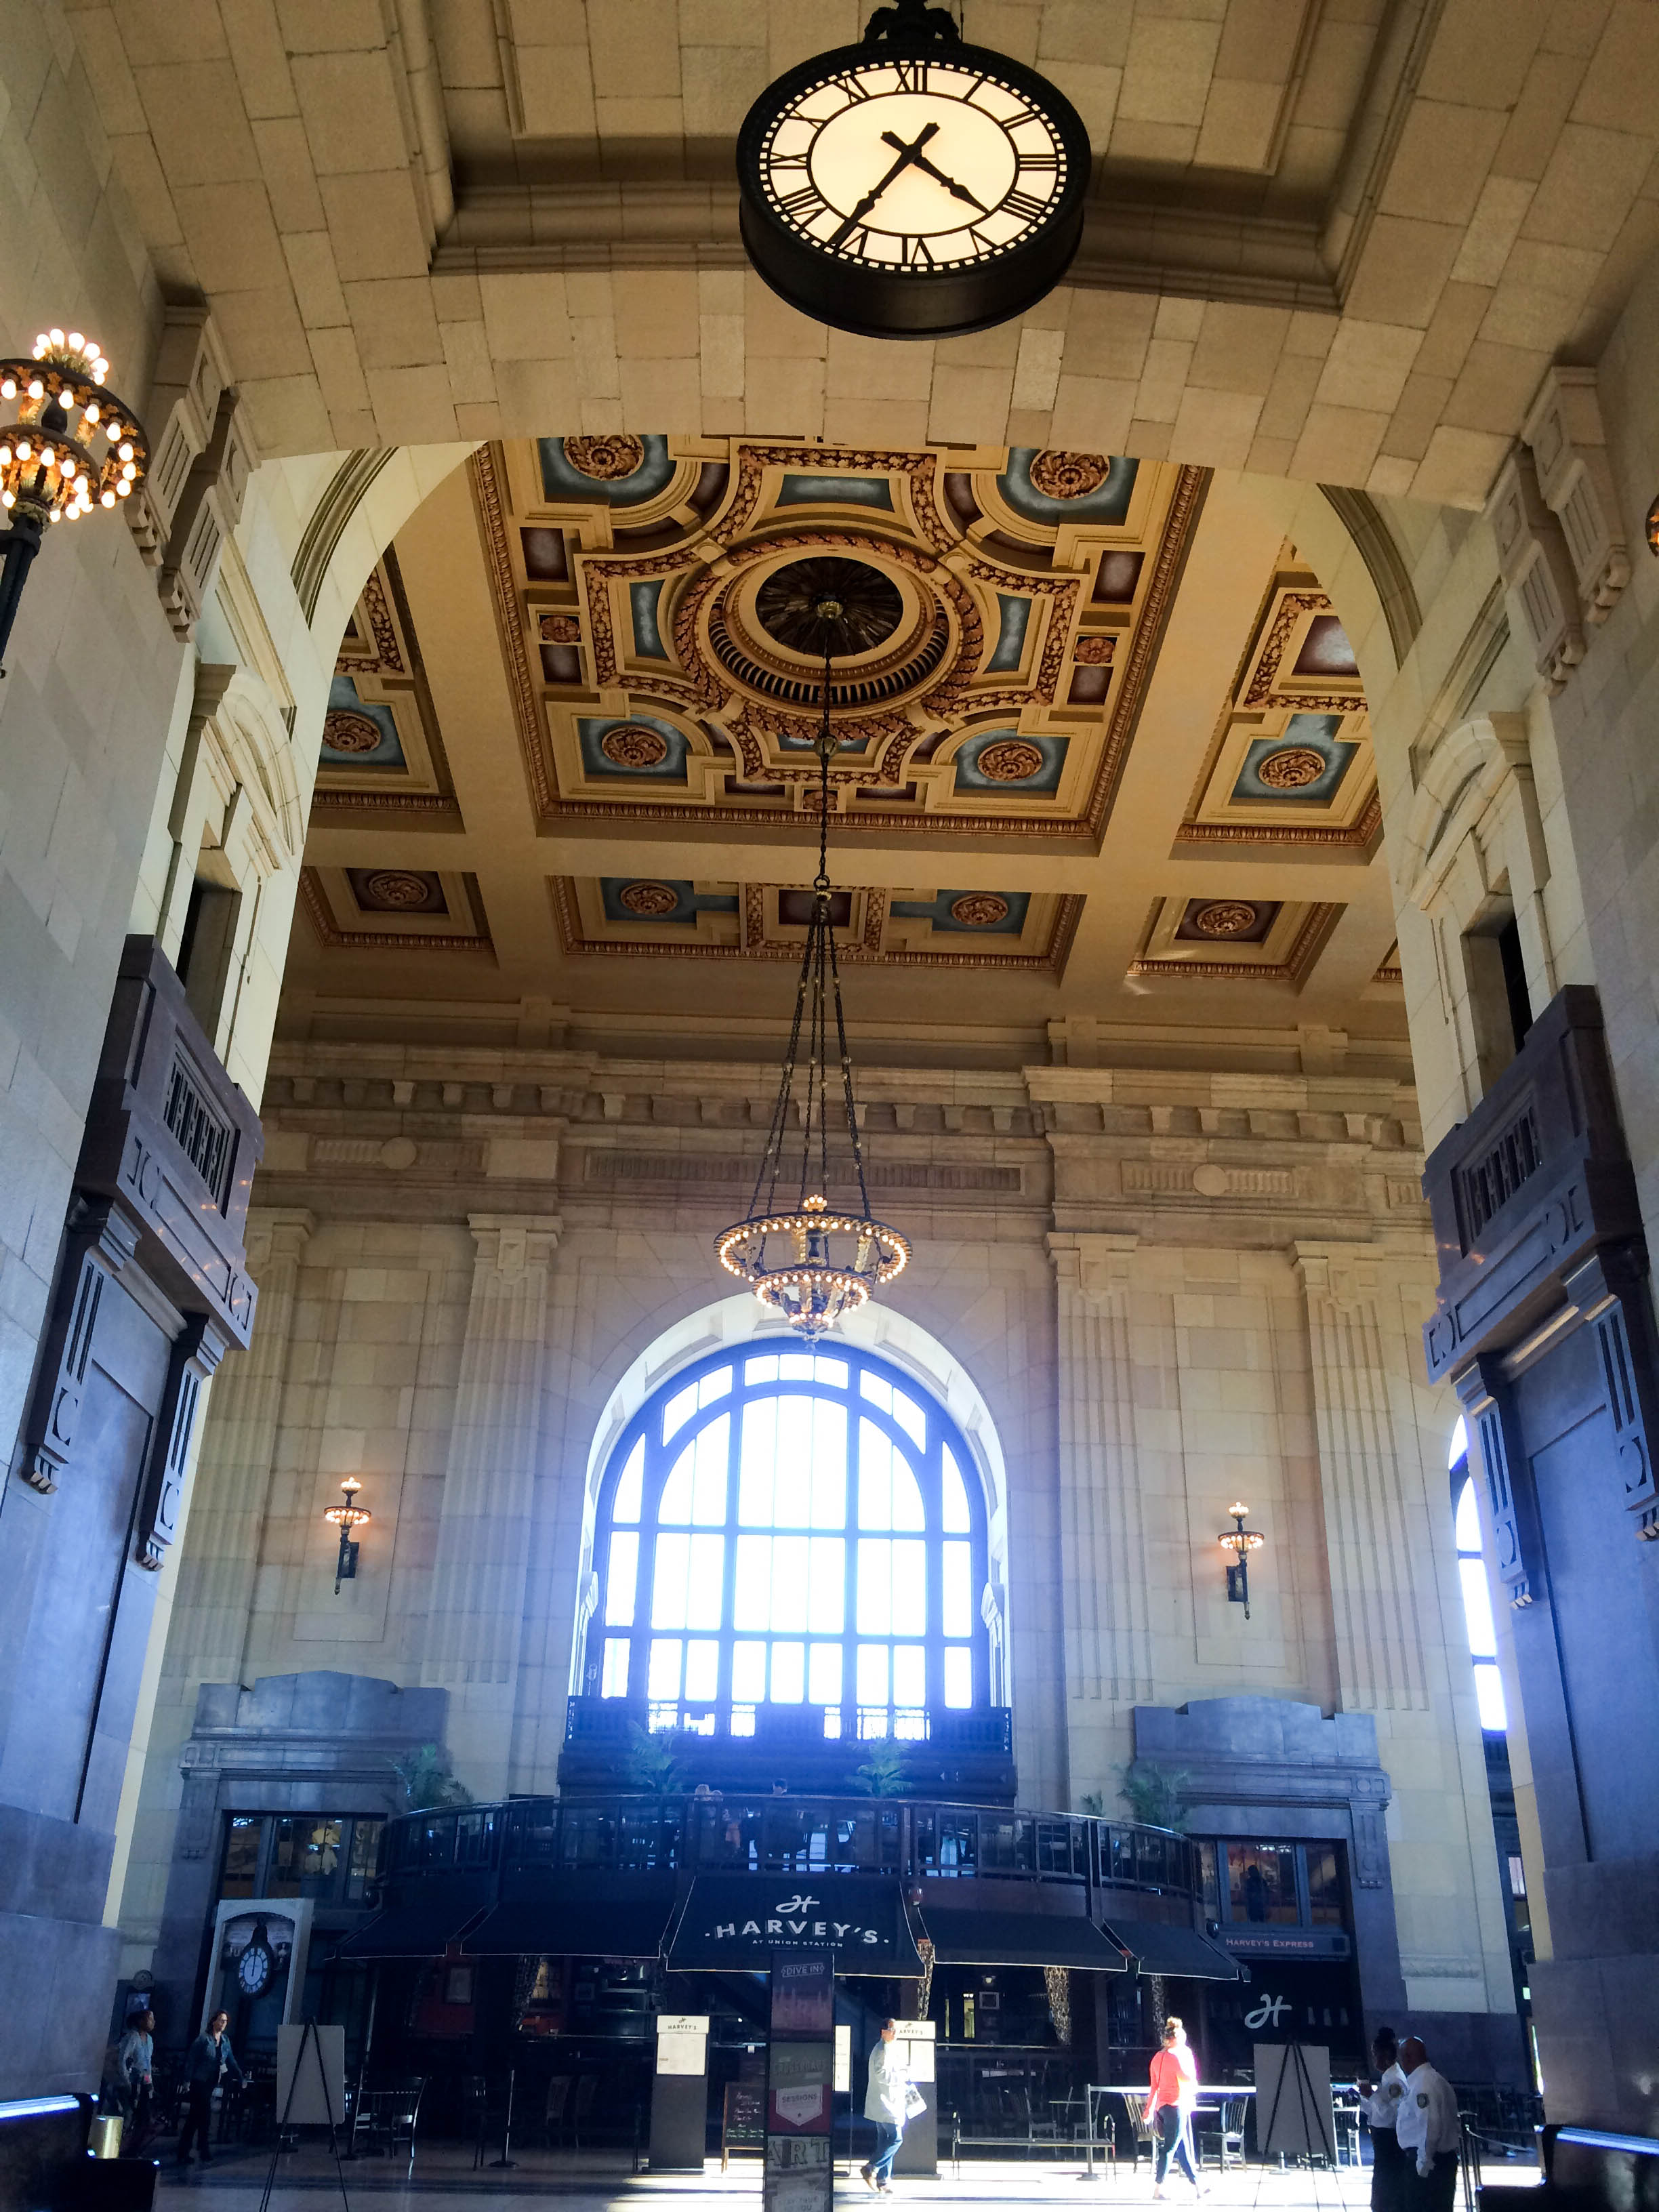 Union Station in Kansas City